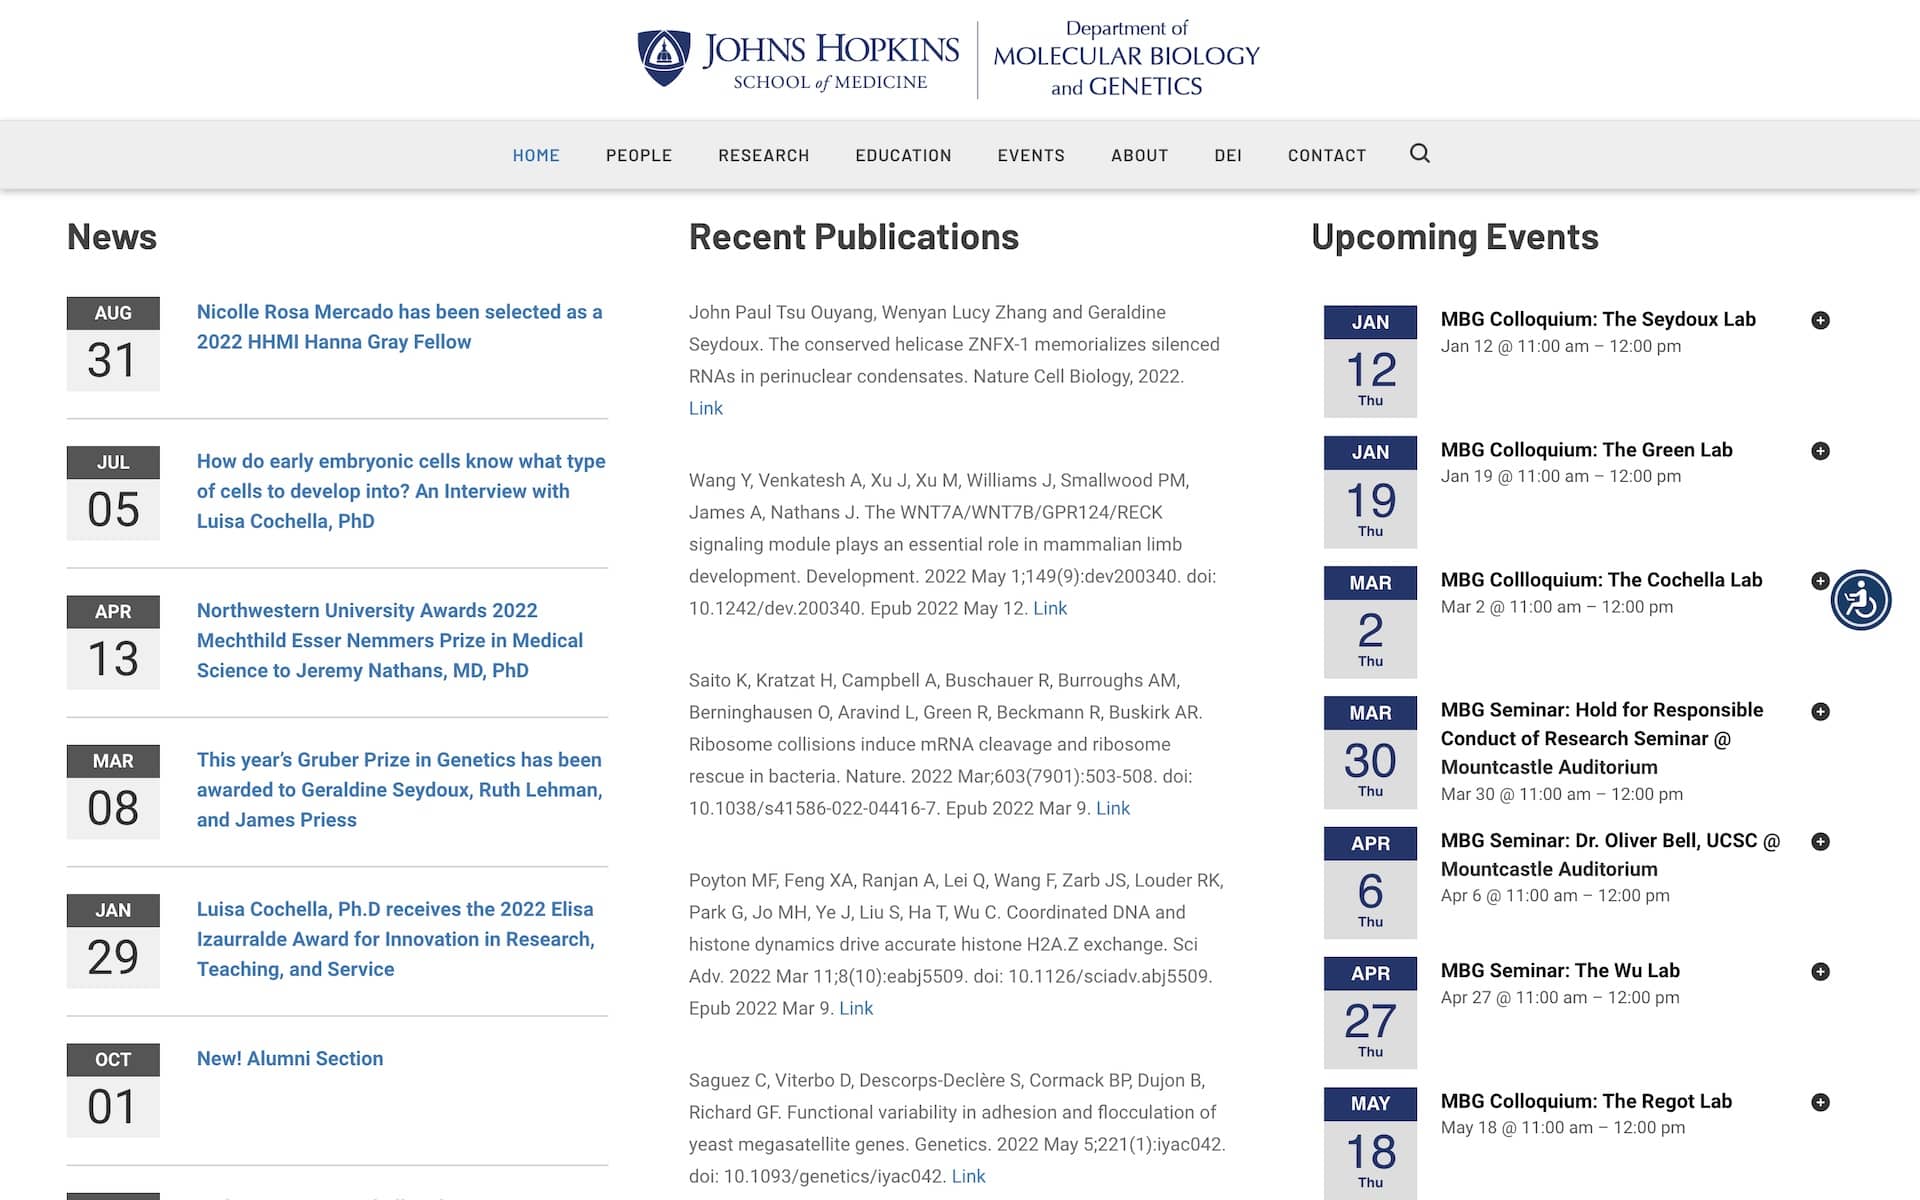 Johns Hopkins Department of Molecular Biology and Genetics Website Page Screenshot